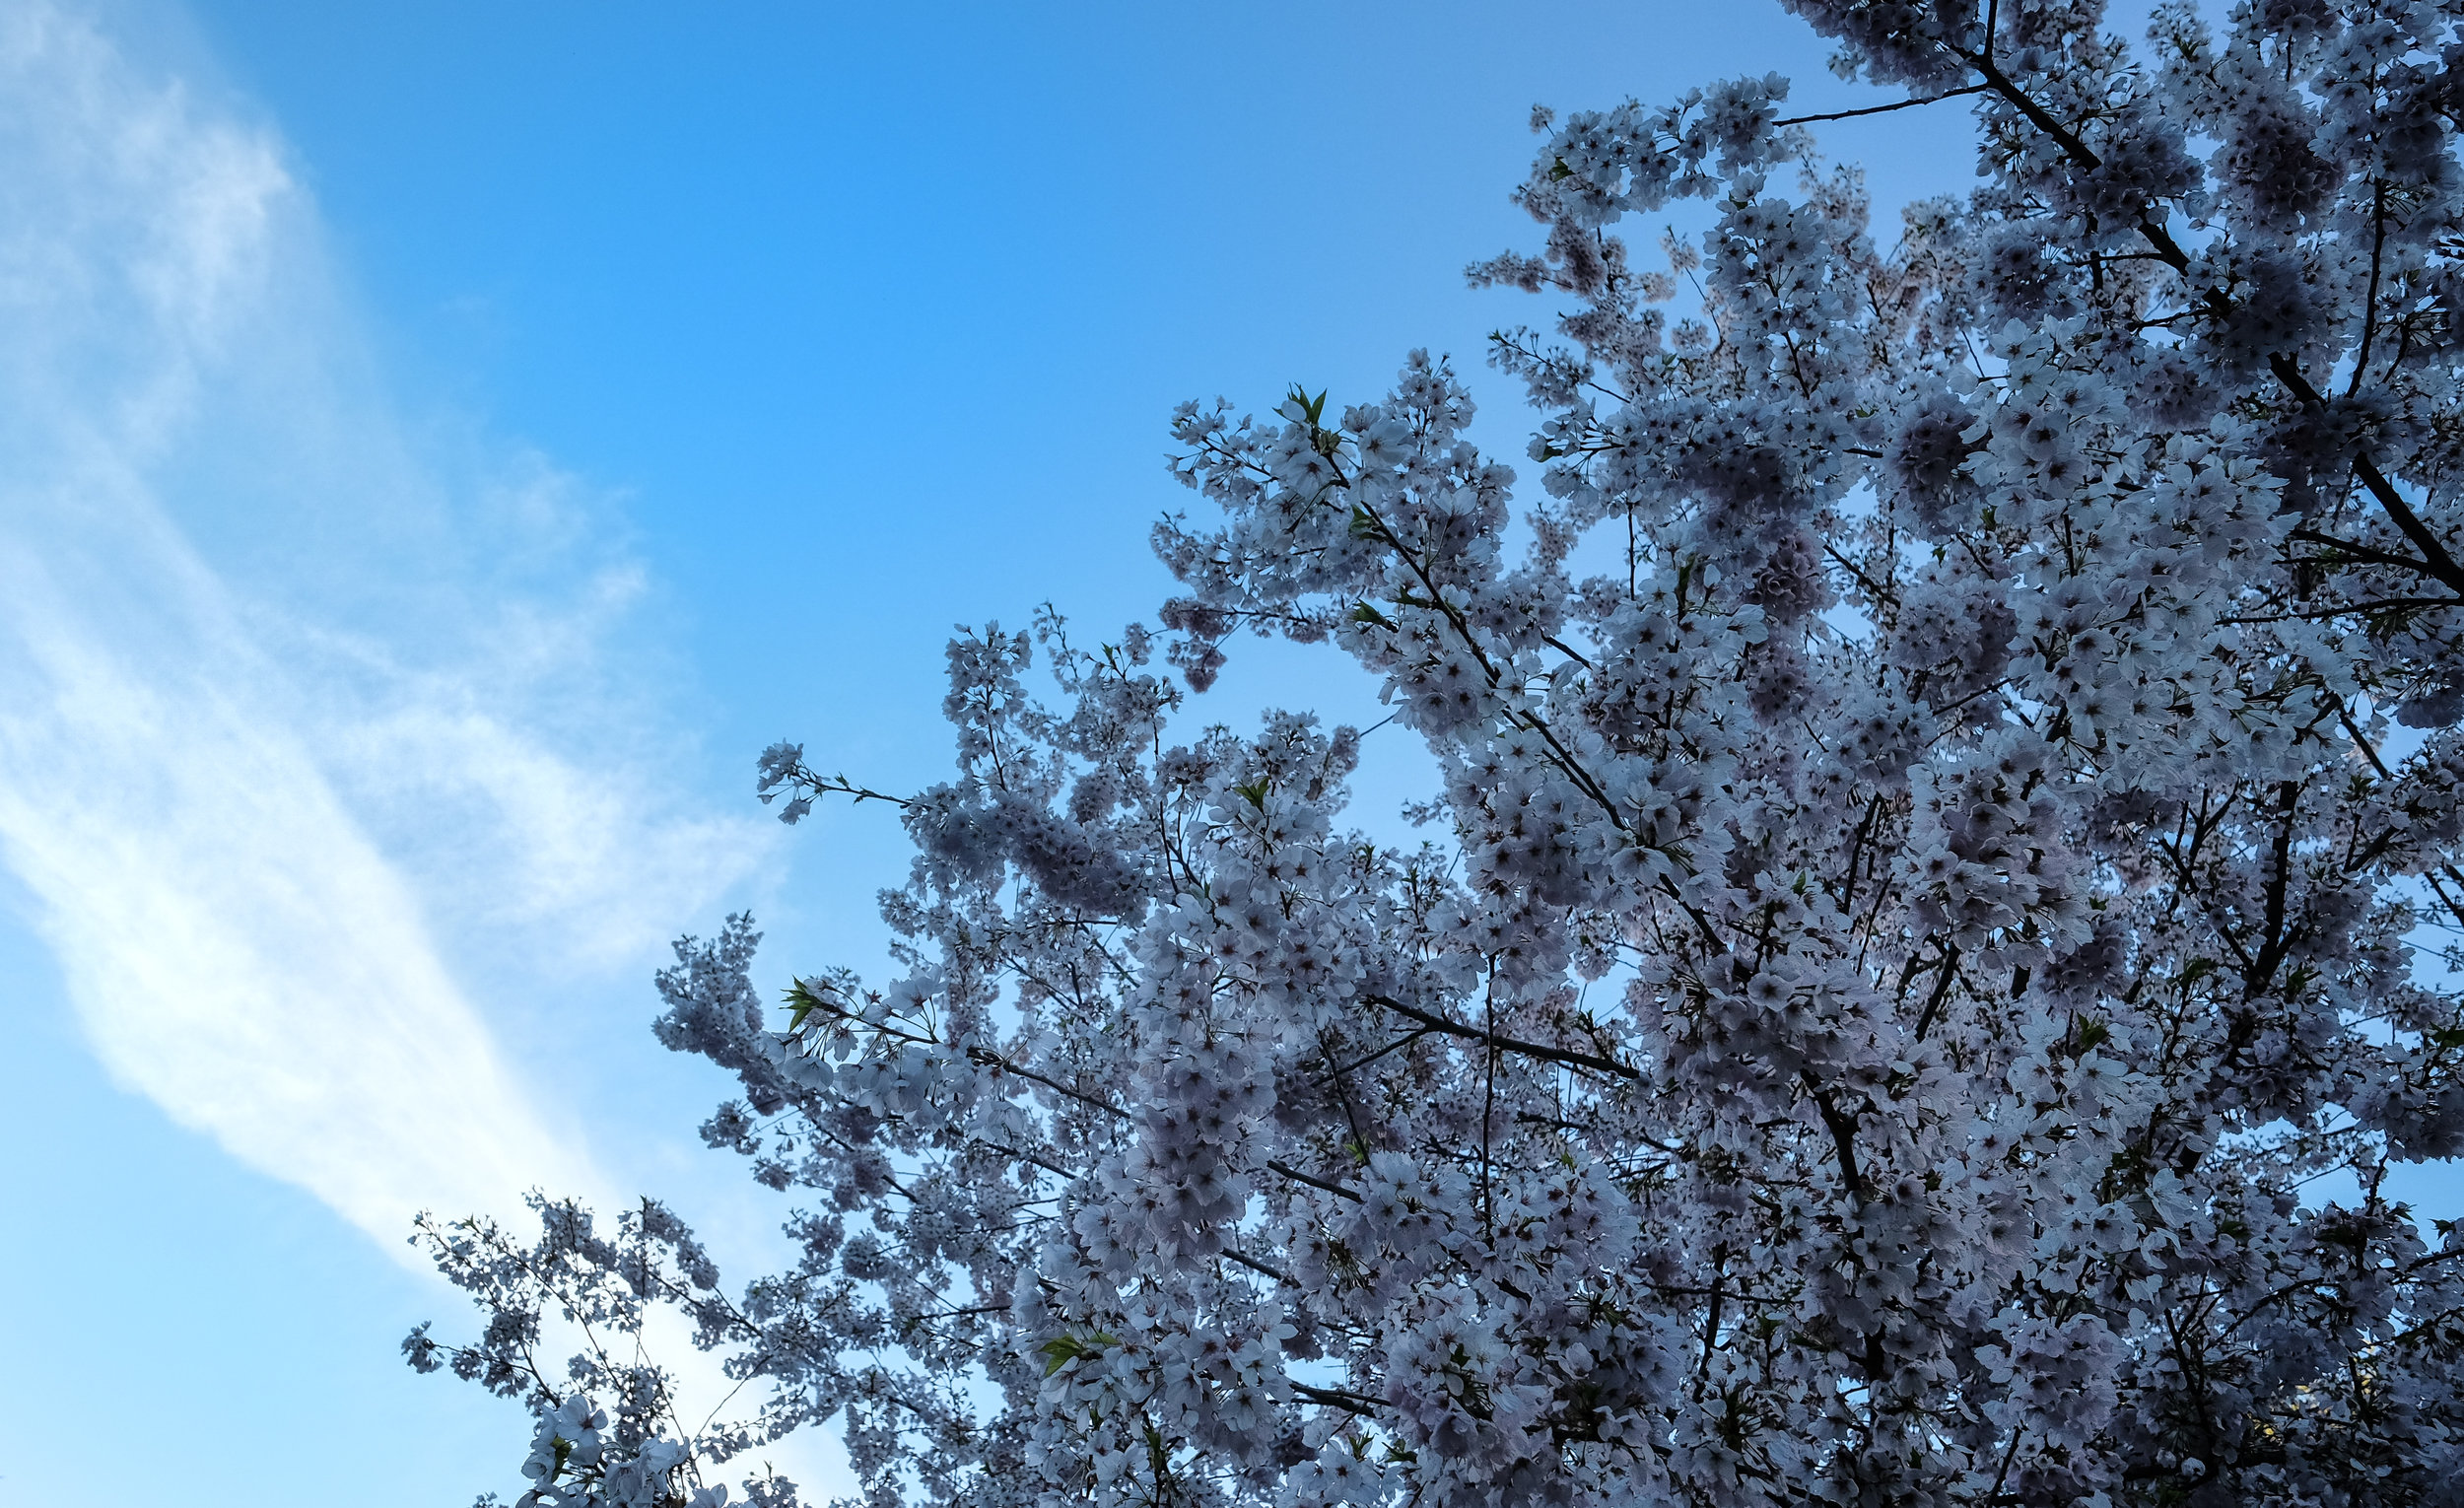 Berg-21-Apr-2017-16-54-56 Cherry, Tree, Blossoms, Flowers, Sky.jpg